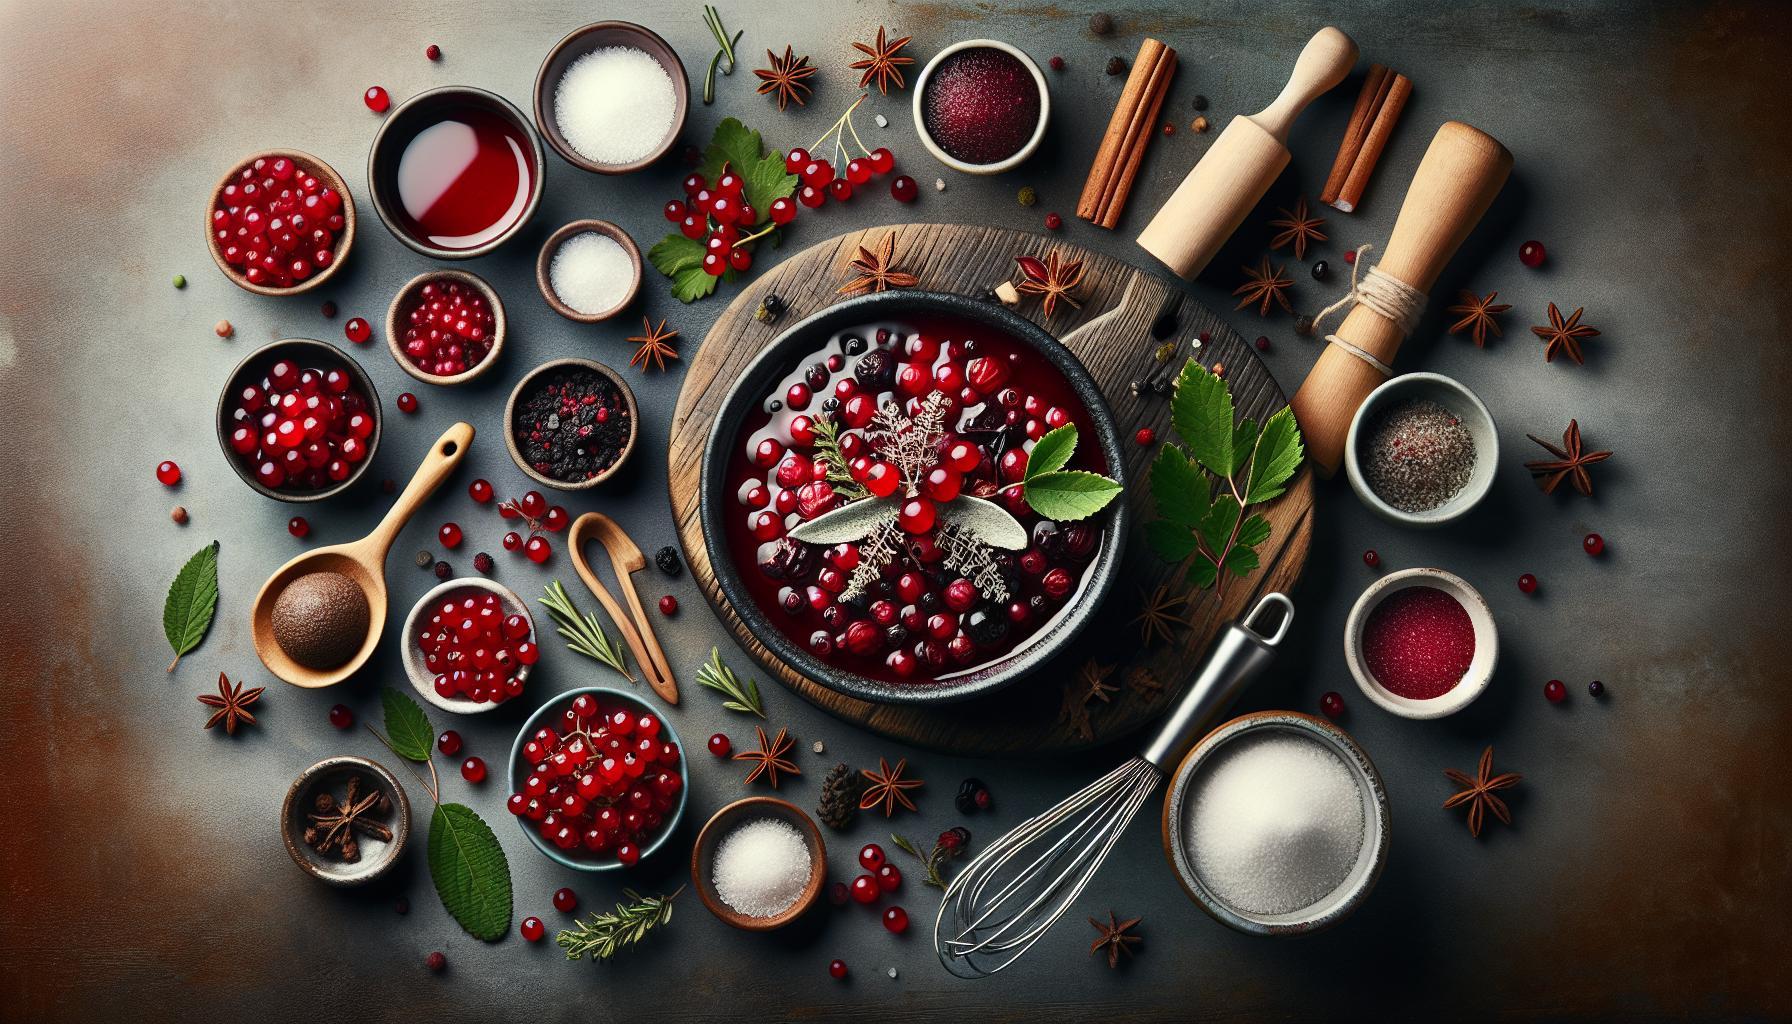 Sumptuous Red Elderberry Delight: Uncover a Unique, Healthy Recipe